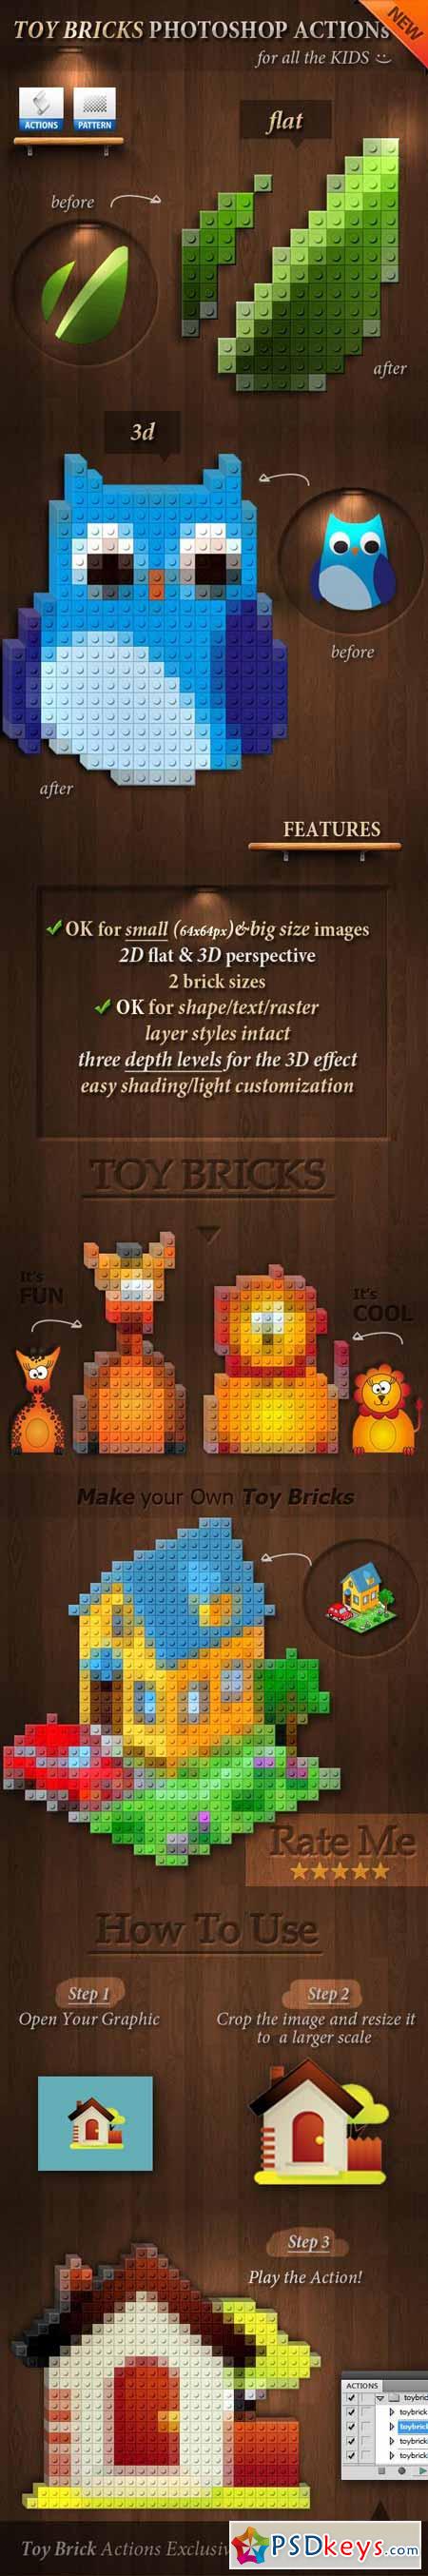 3D Toy Bricks Photoshop Actions 3924994